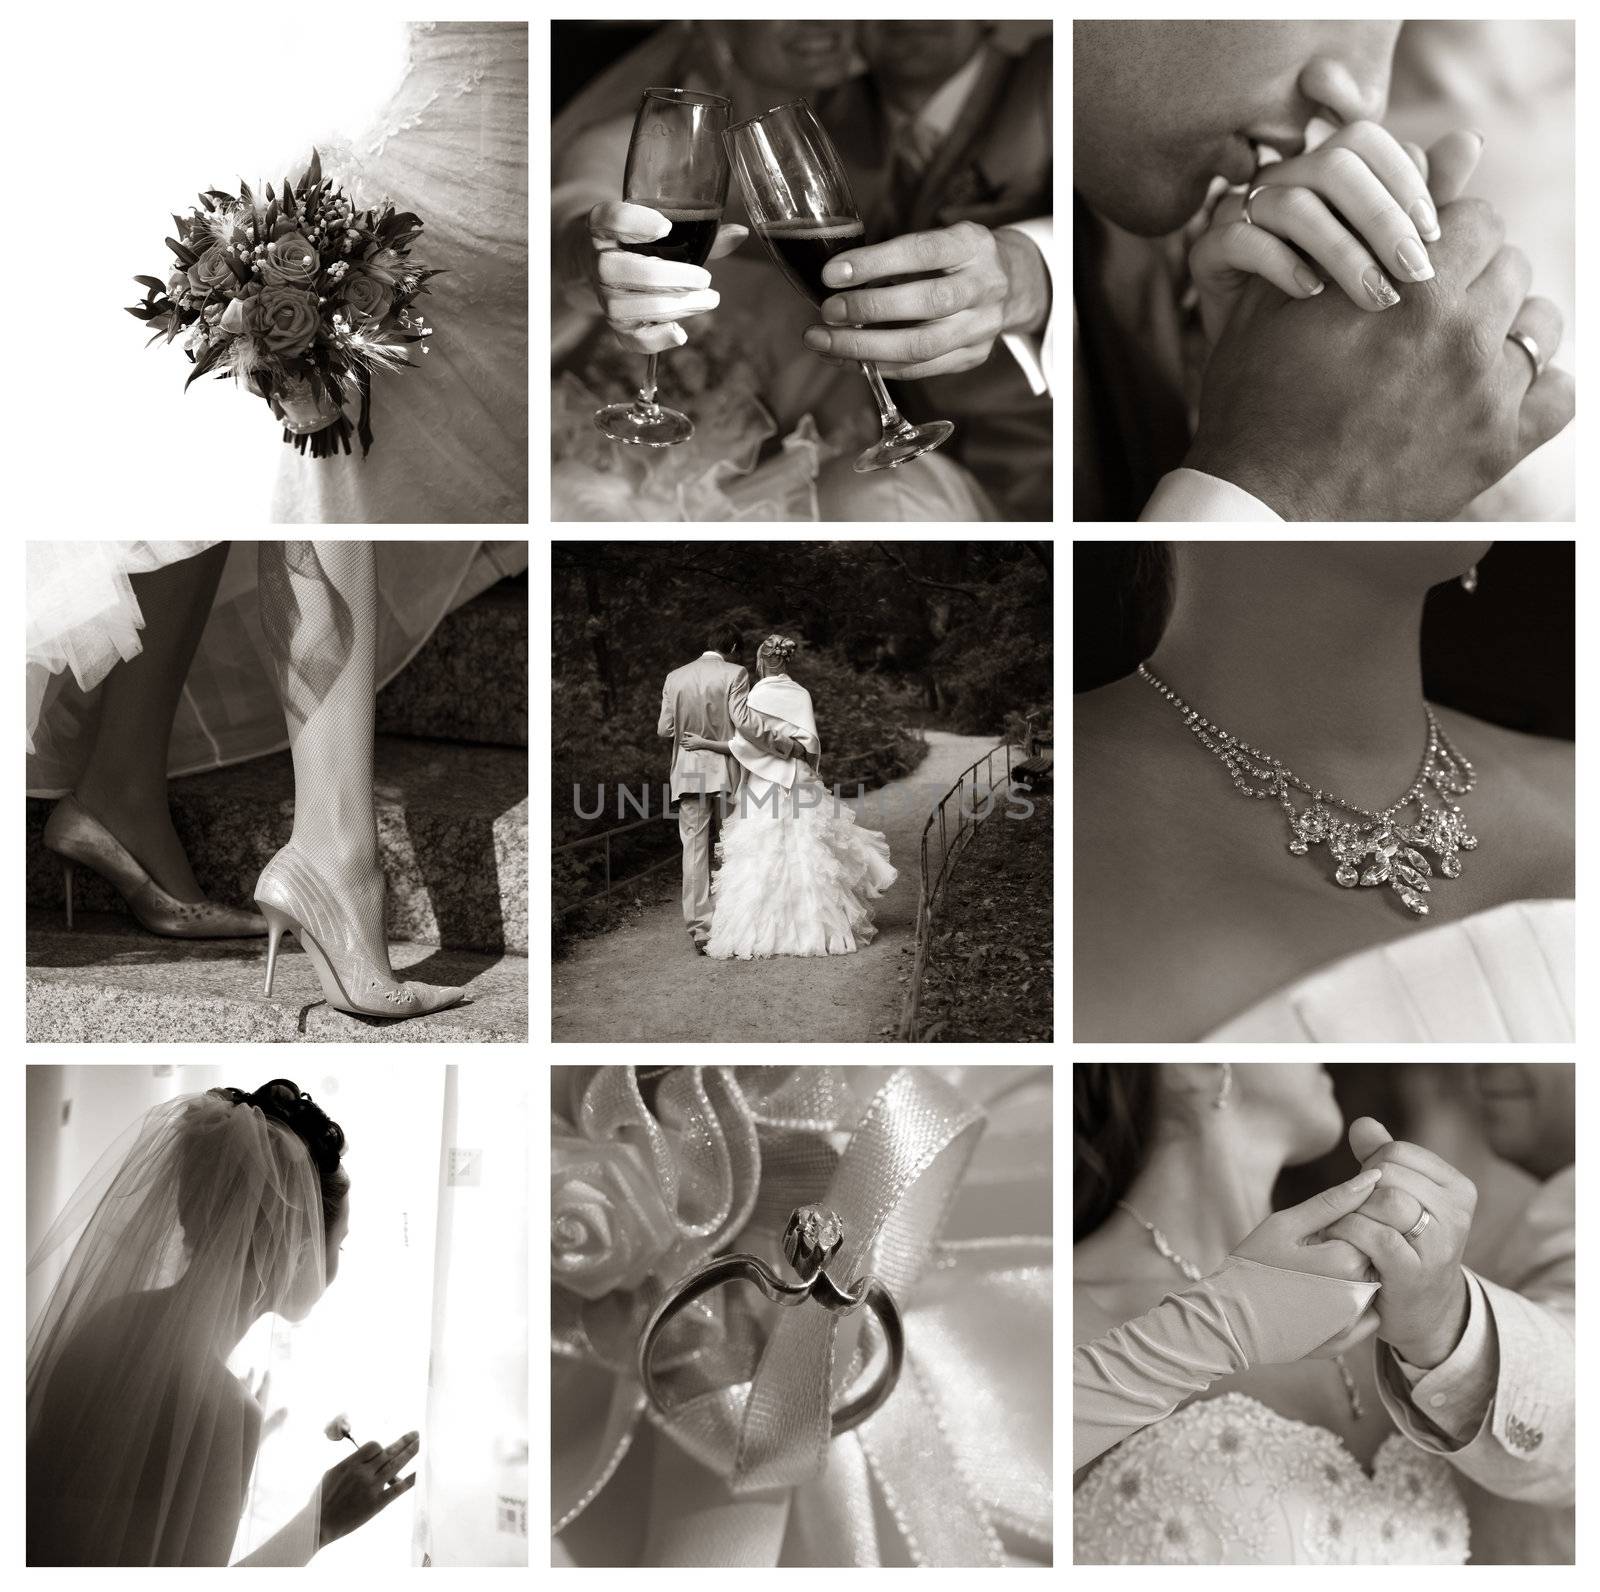 Collage of nine wedding photos in sepia tone